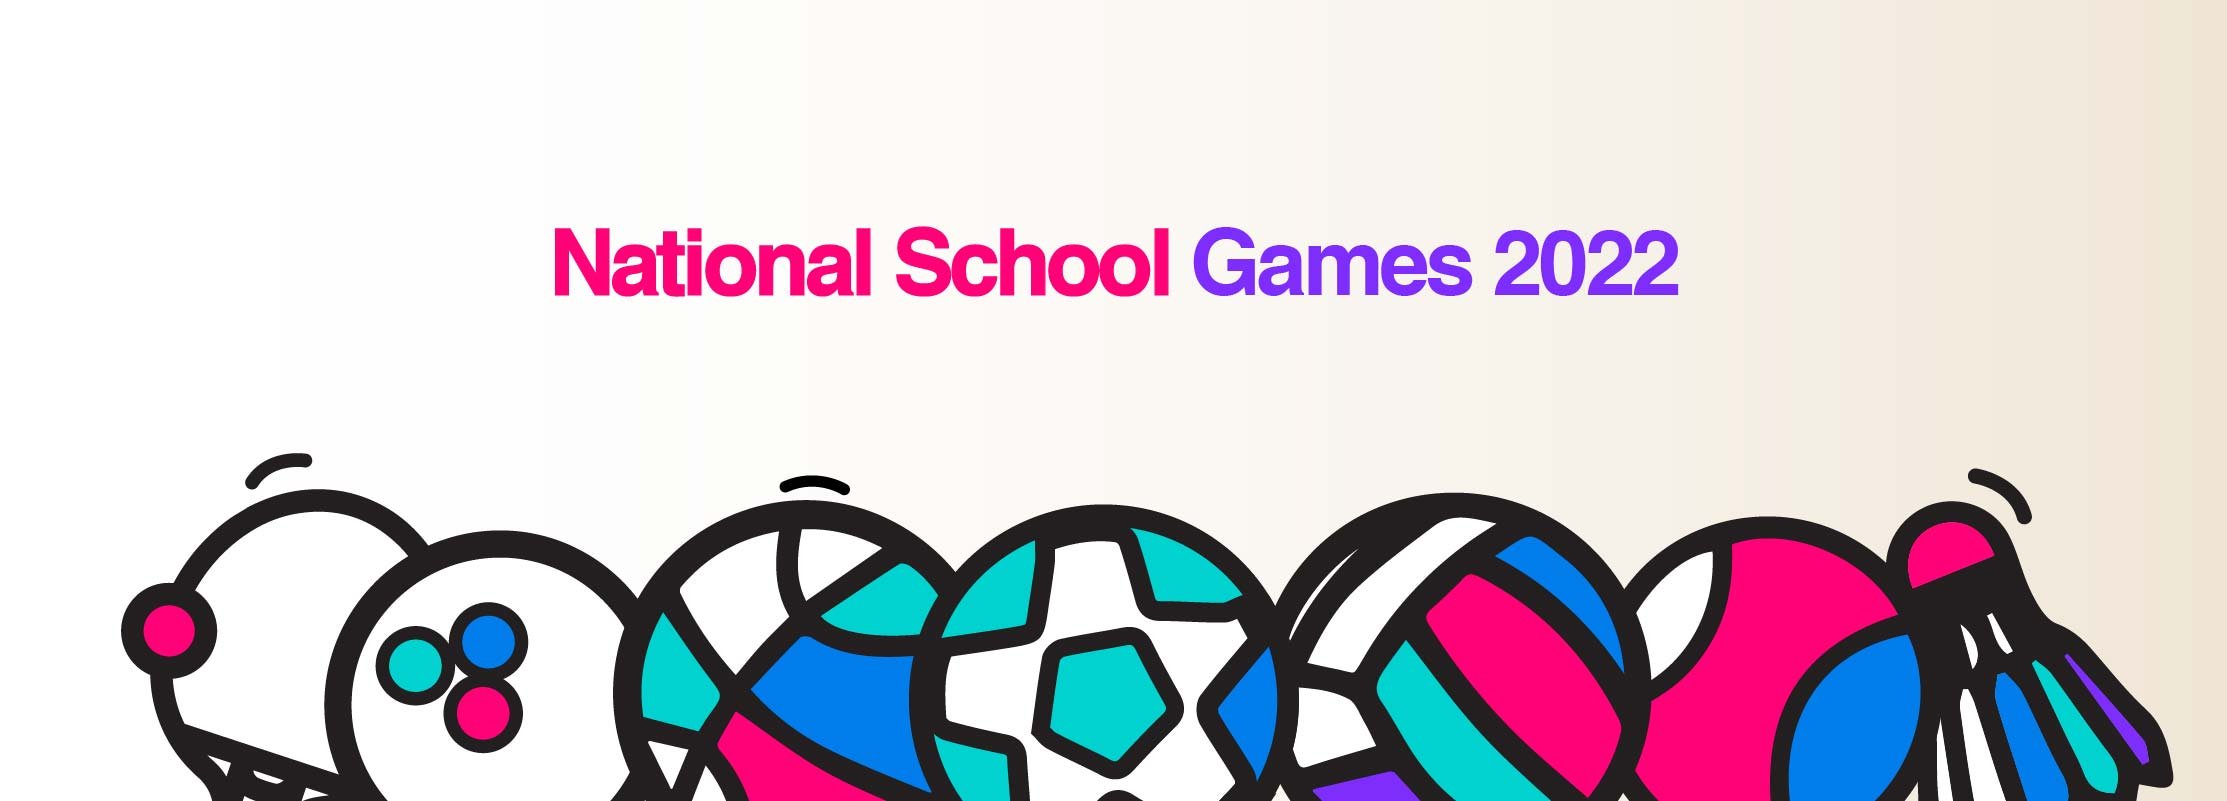 National School Games 2022 | Stories